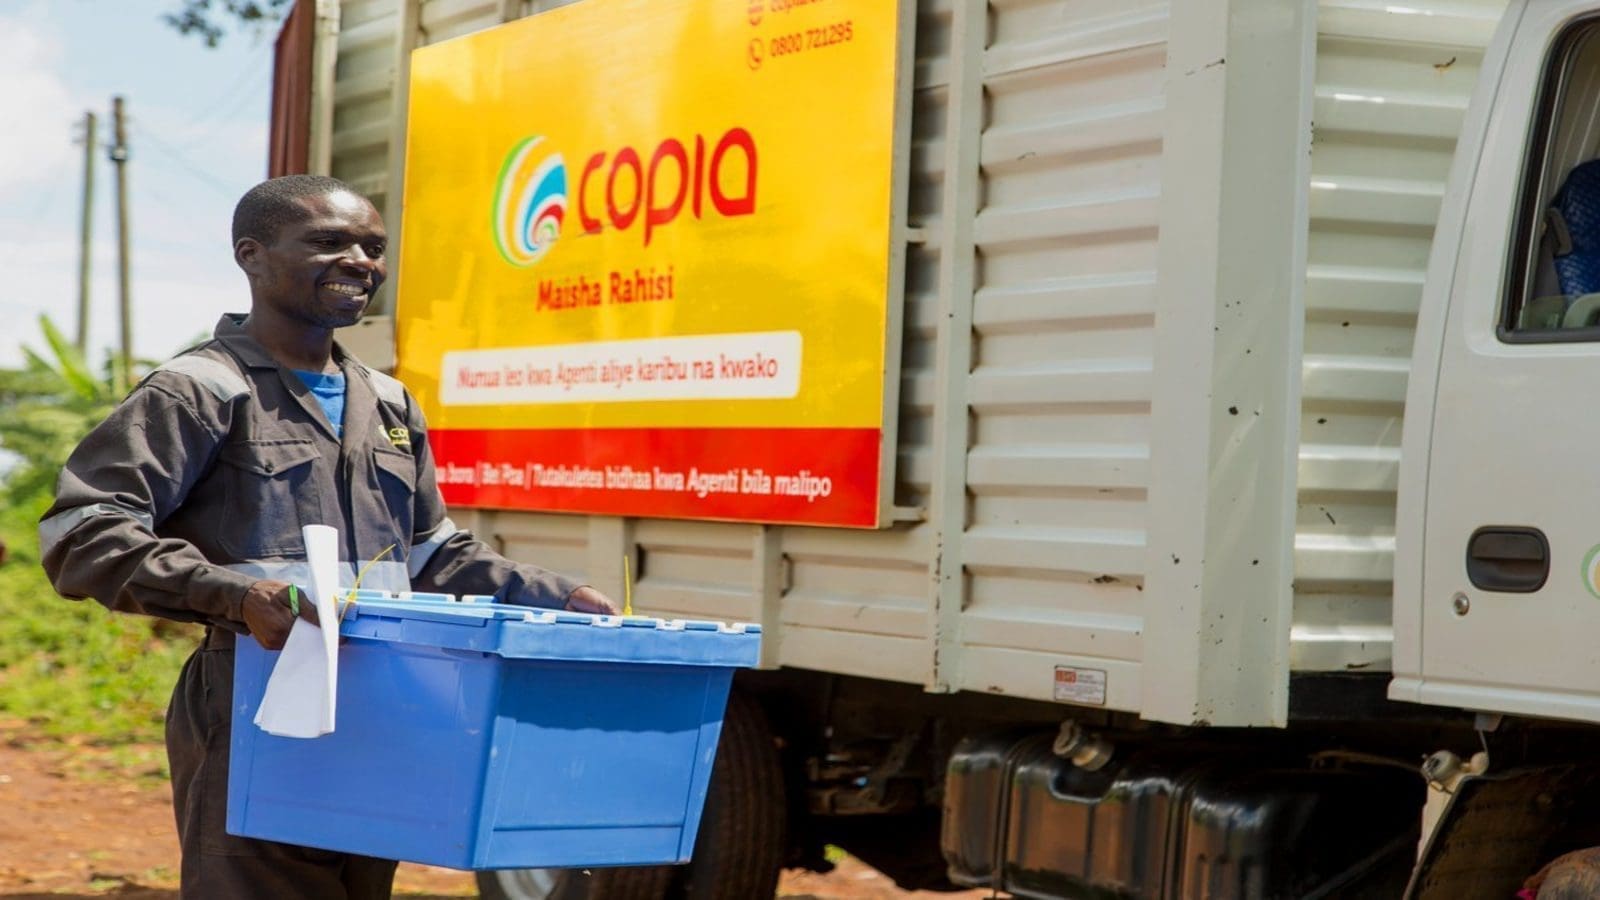 Copia exits Ugandan market, suspends expansion drive for Africa